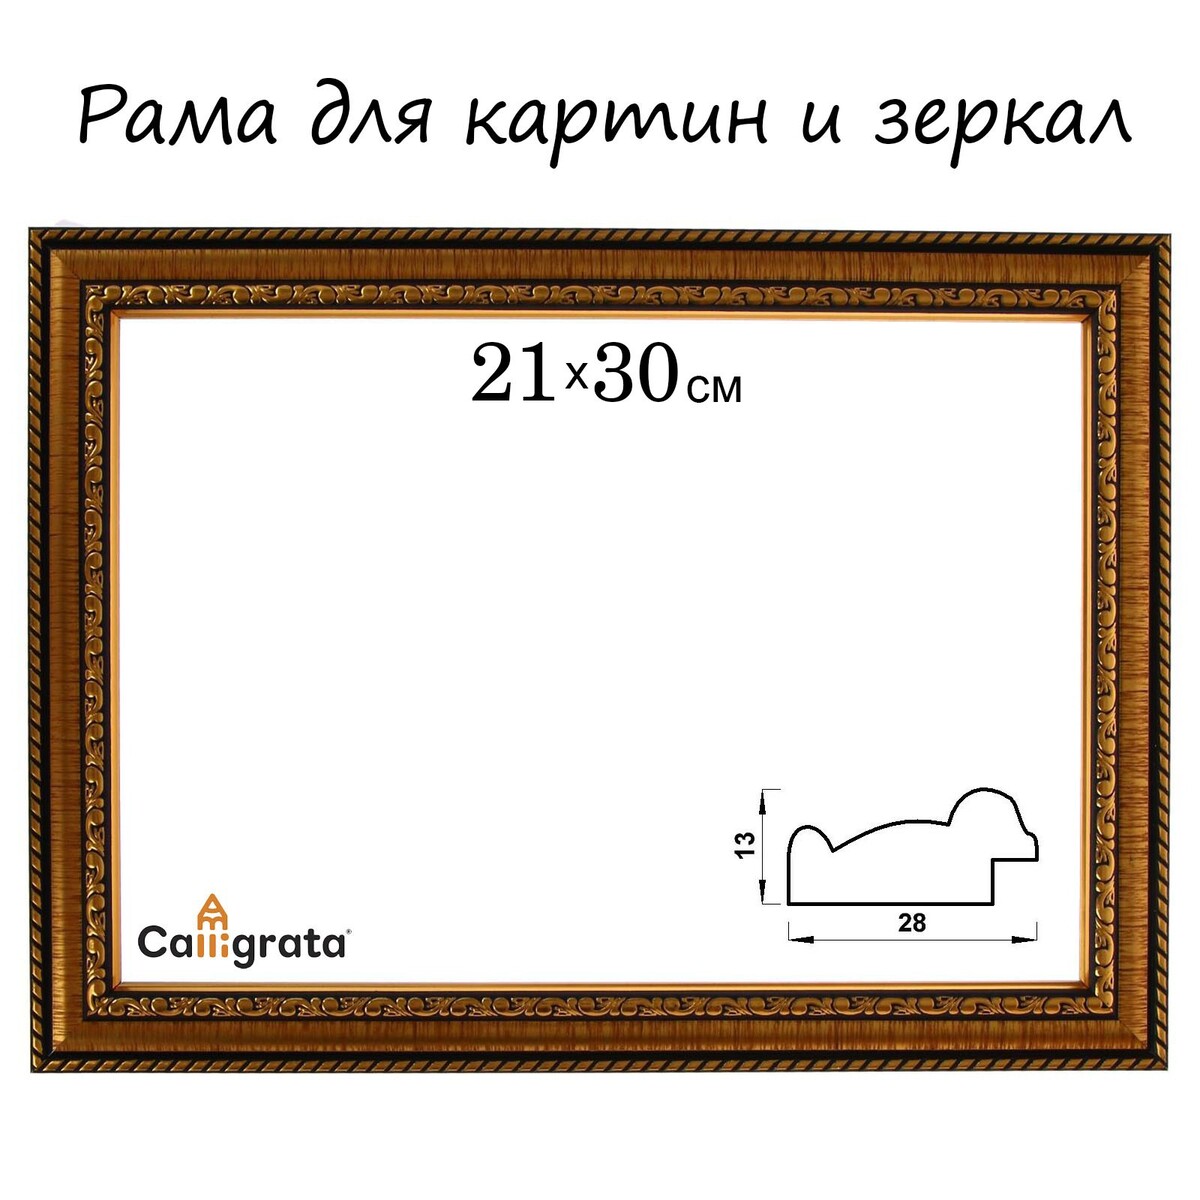 Рама для картин (зеркал) 21 х 30 х 2,8 см, пластиковая, calligrata 6448, золотой